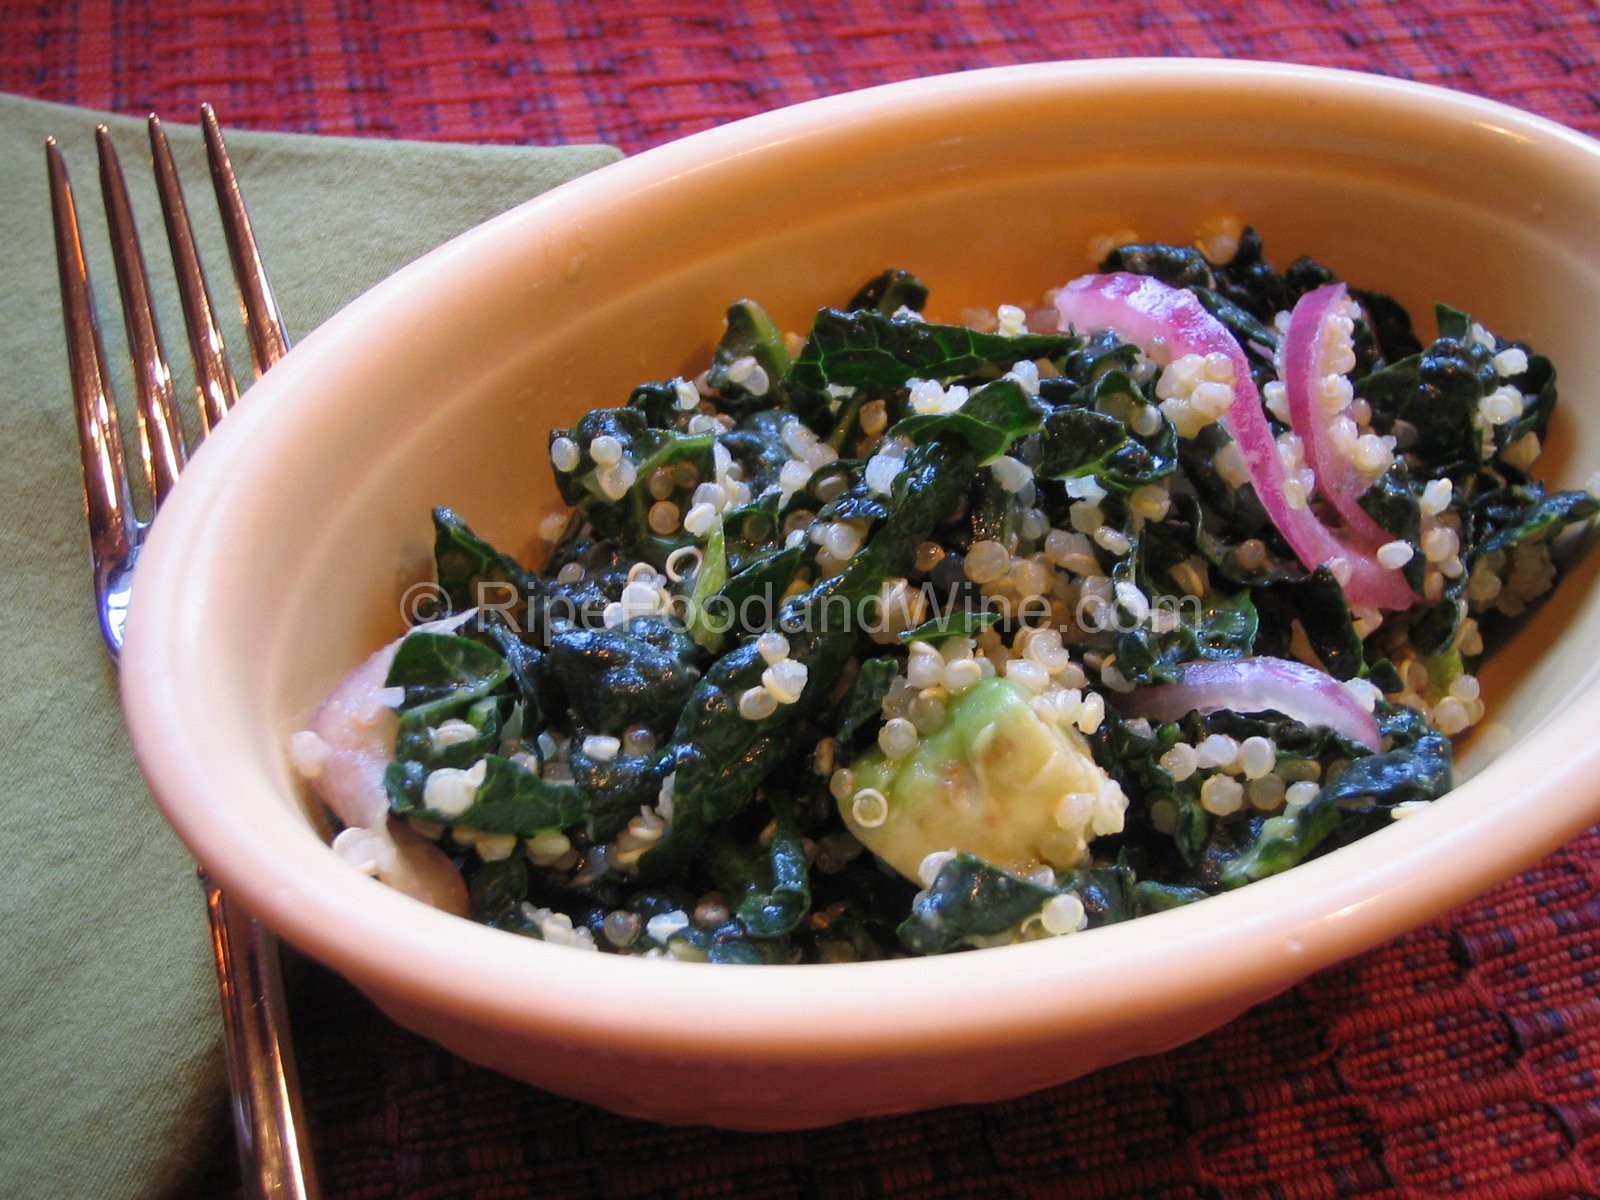 Raw Kale Salad with Quinoa